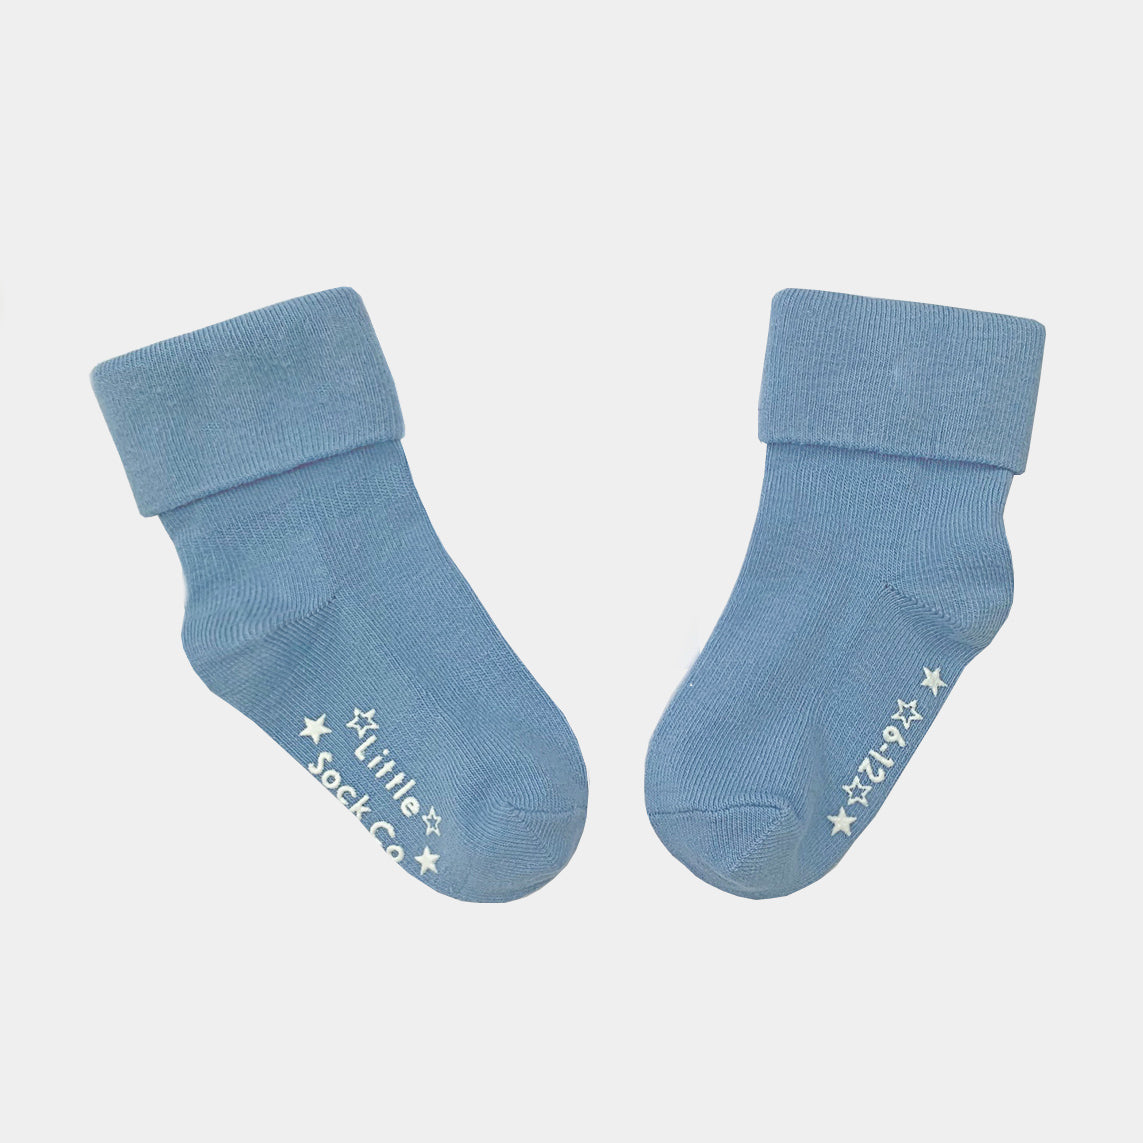 Non-Slip Stay On Baby and Toddler Socks - 3 Pack in Ocean Blue